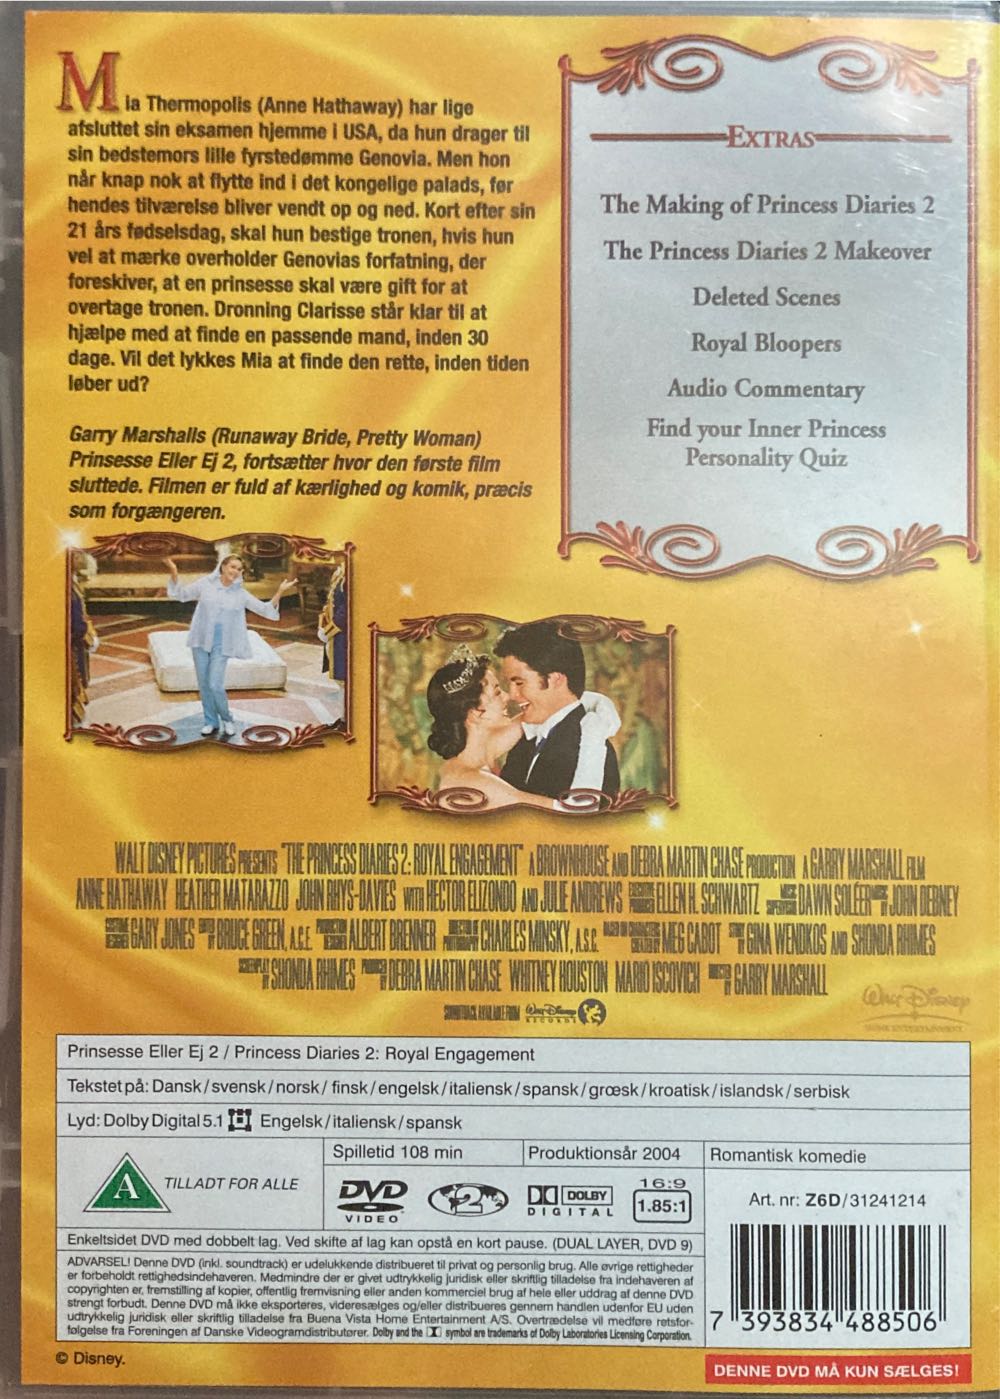 The Princess Diaries 2: Royal Engagement 4K Ultra HD movie collectible [Barcode 7393834488506] - Main Image 2